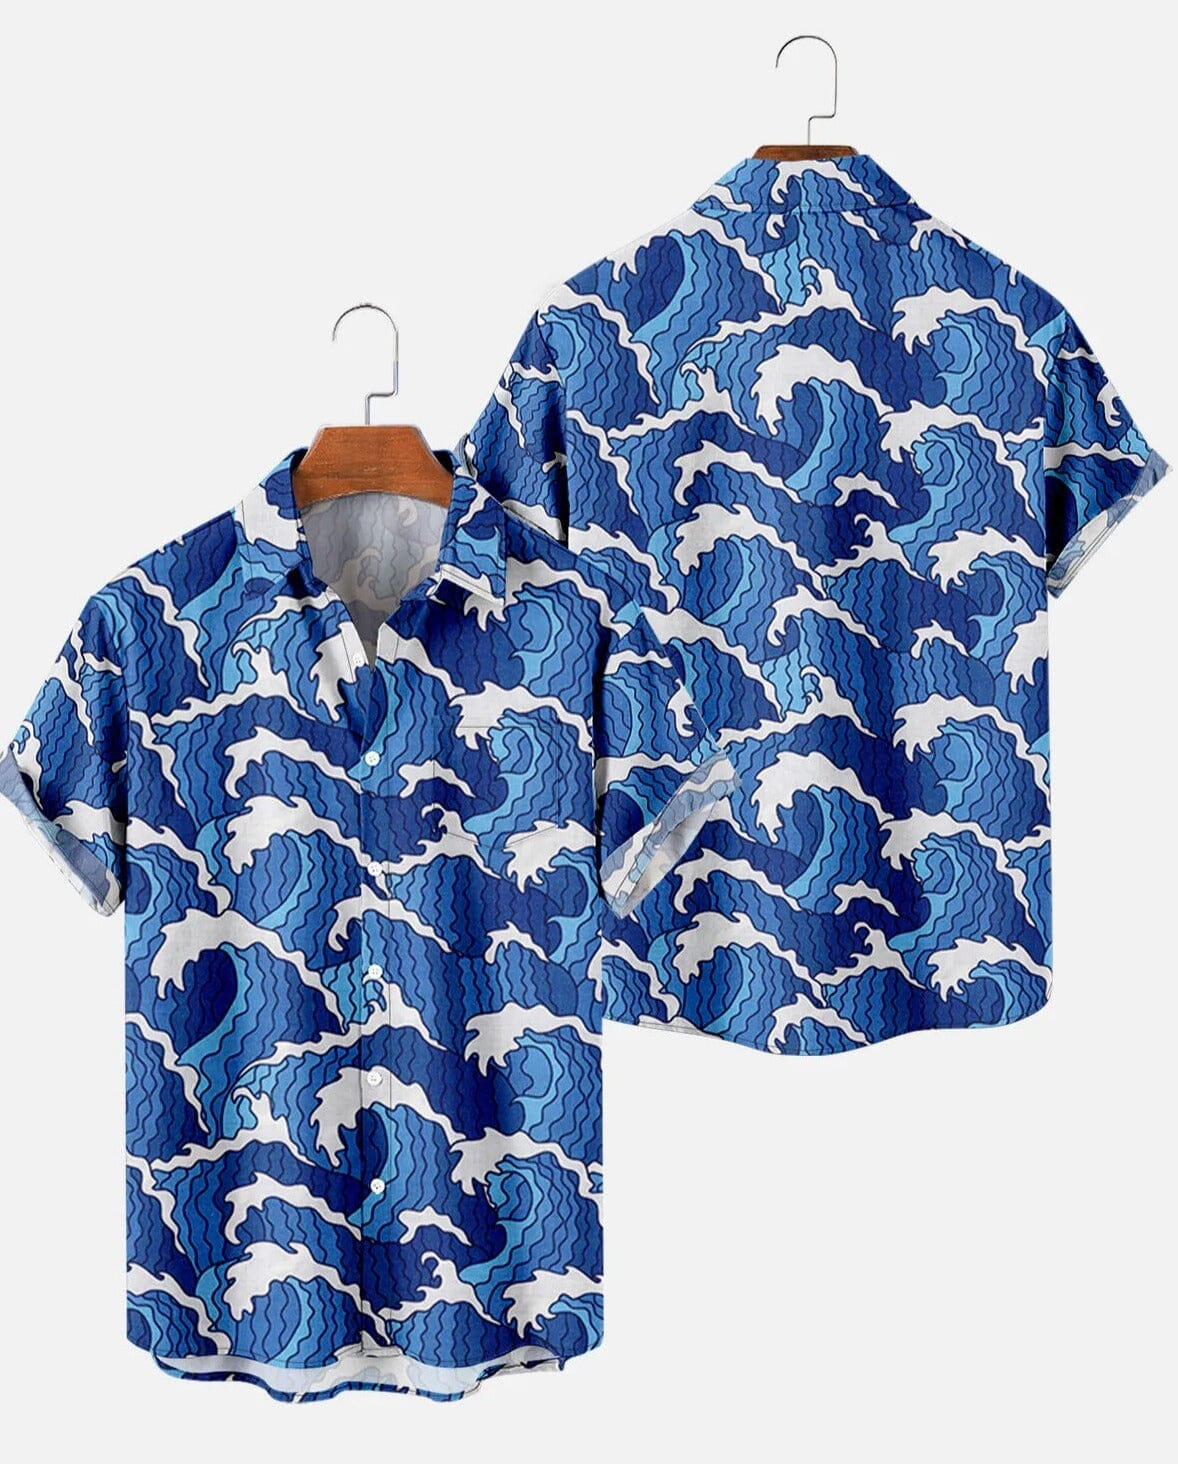 Camisa Casual com Estampas Japonesas Camisa GatoGeek Azul Claro (Ondas) PP (S) 